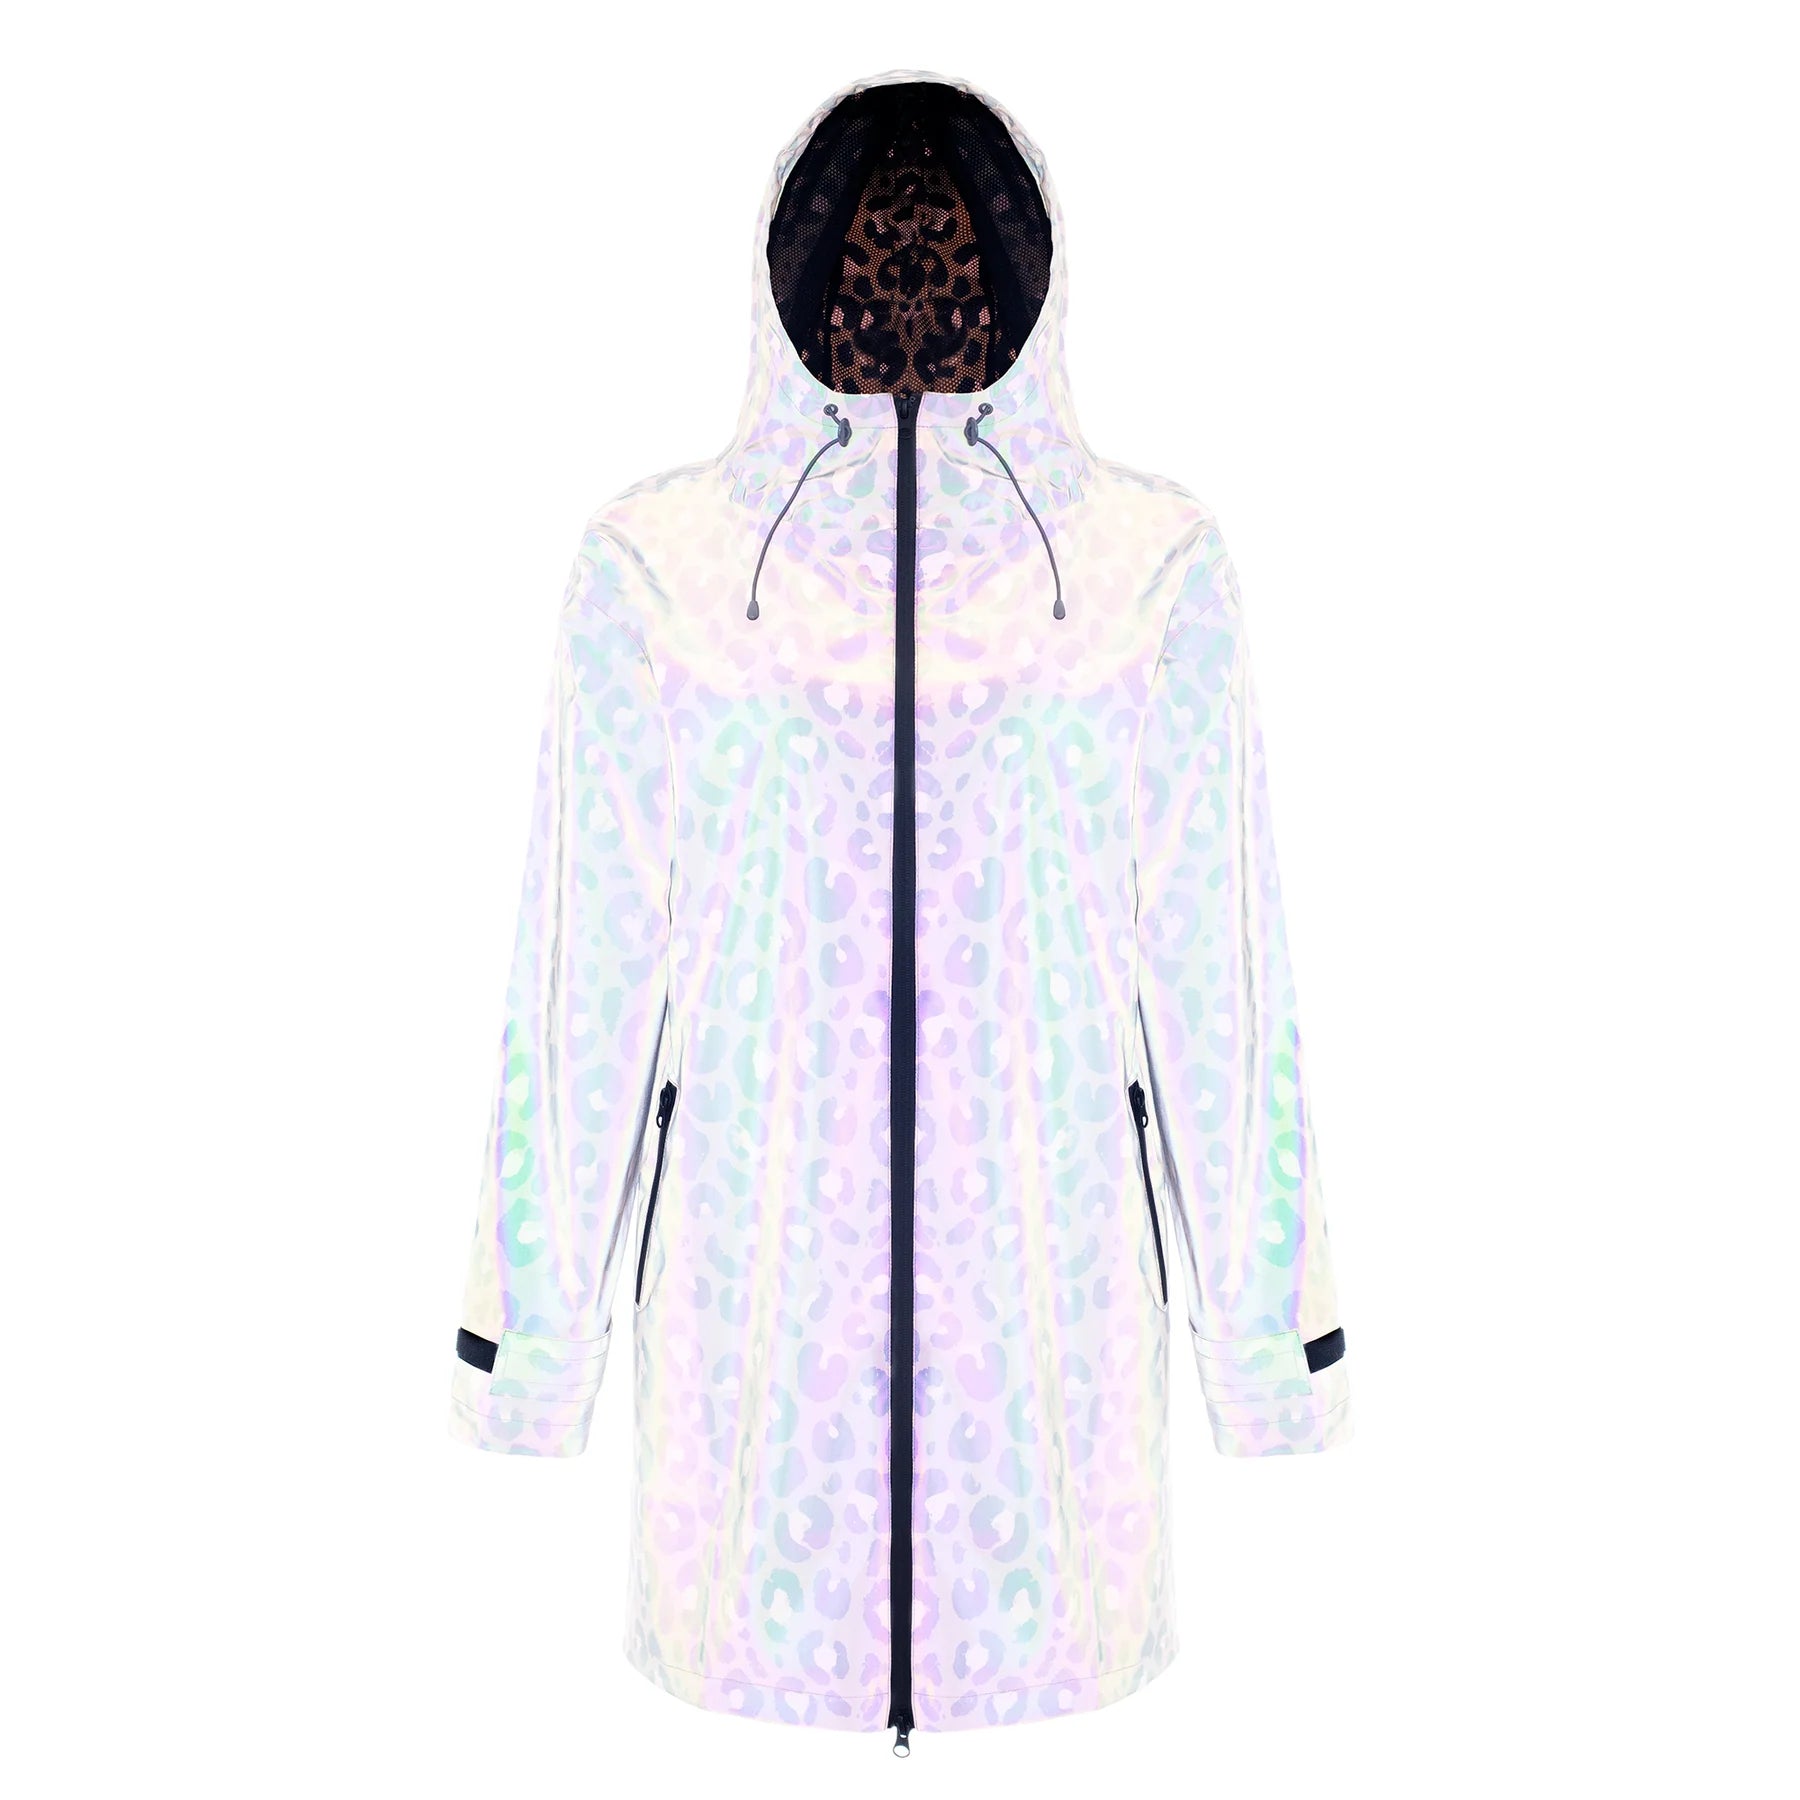 Chewy Vuitton - Reflective Raincoat